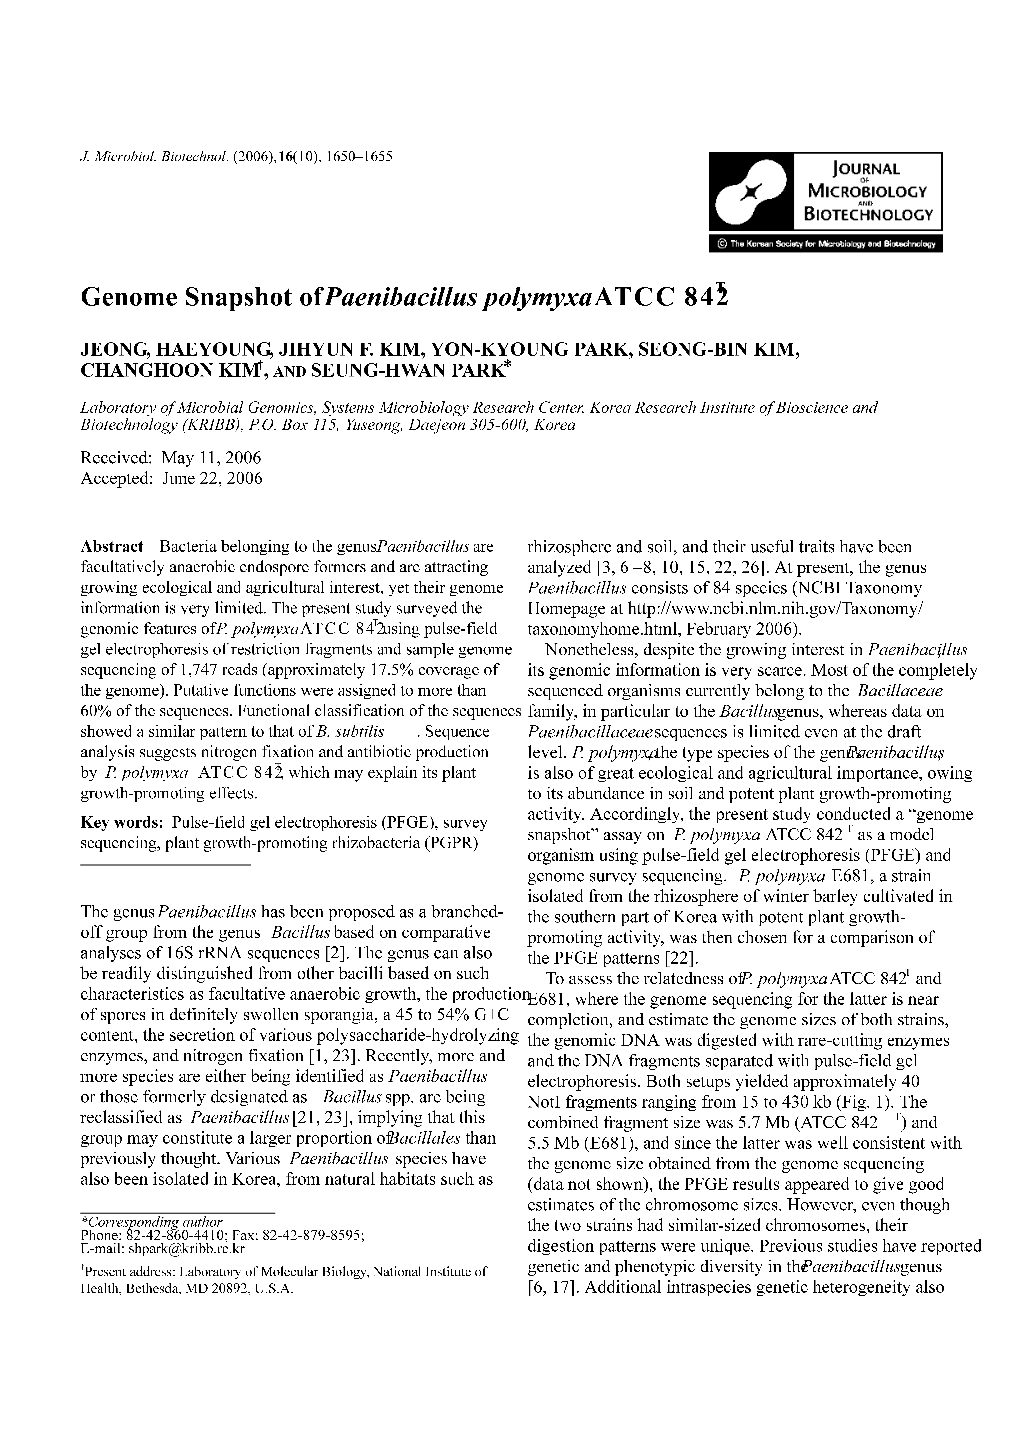 Genome Snapshot of Paenibacillus Polymyxa ATCC 842T